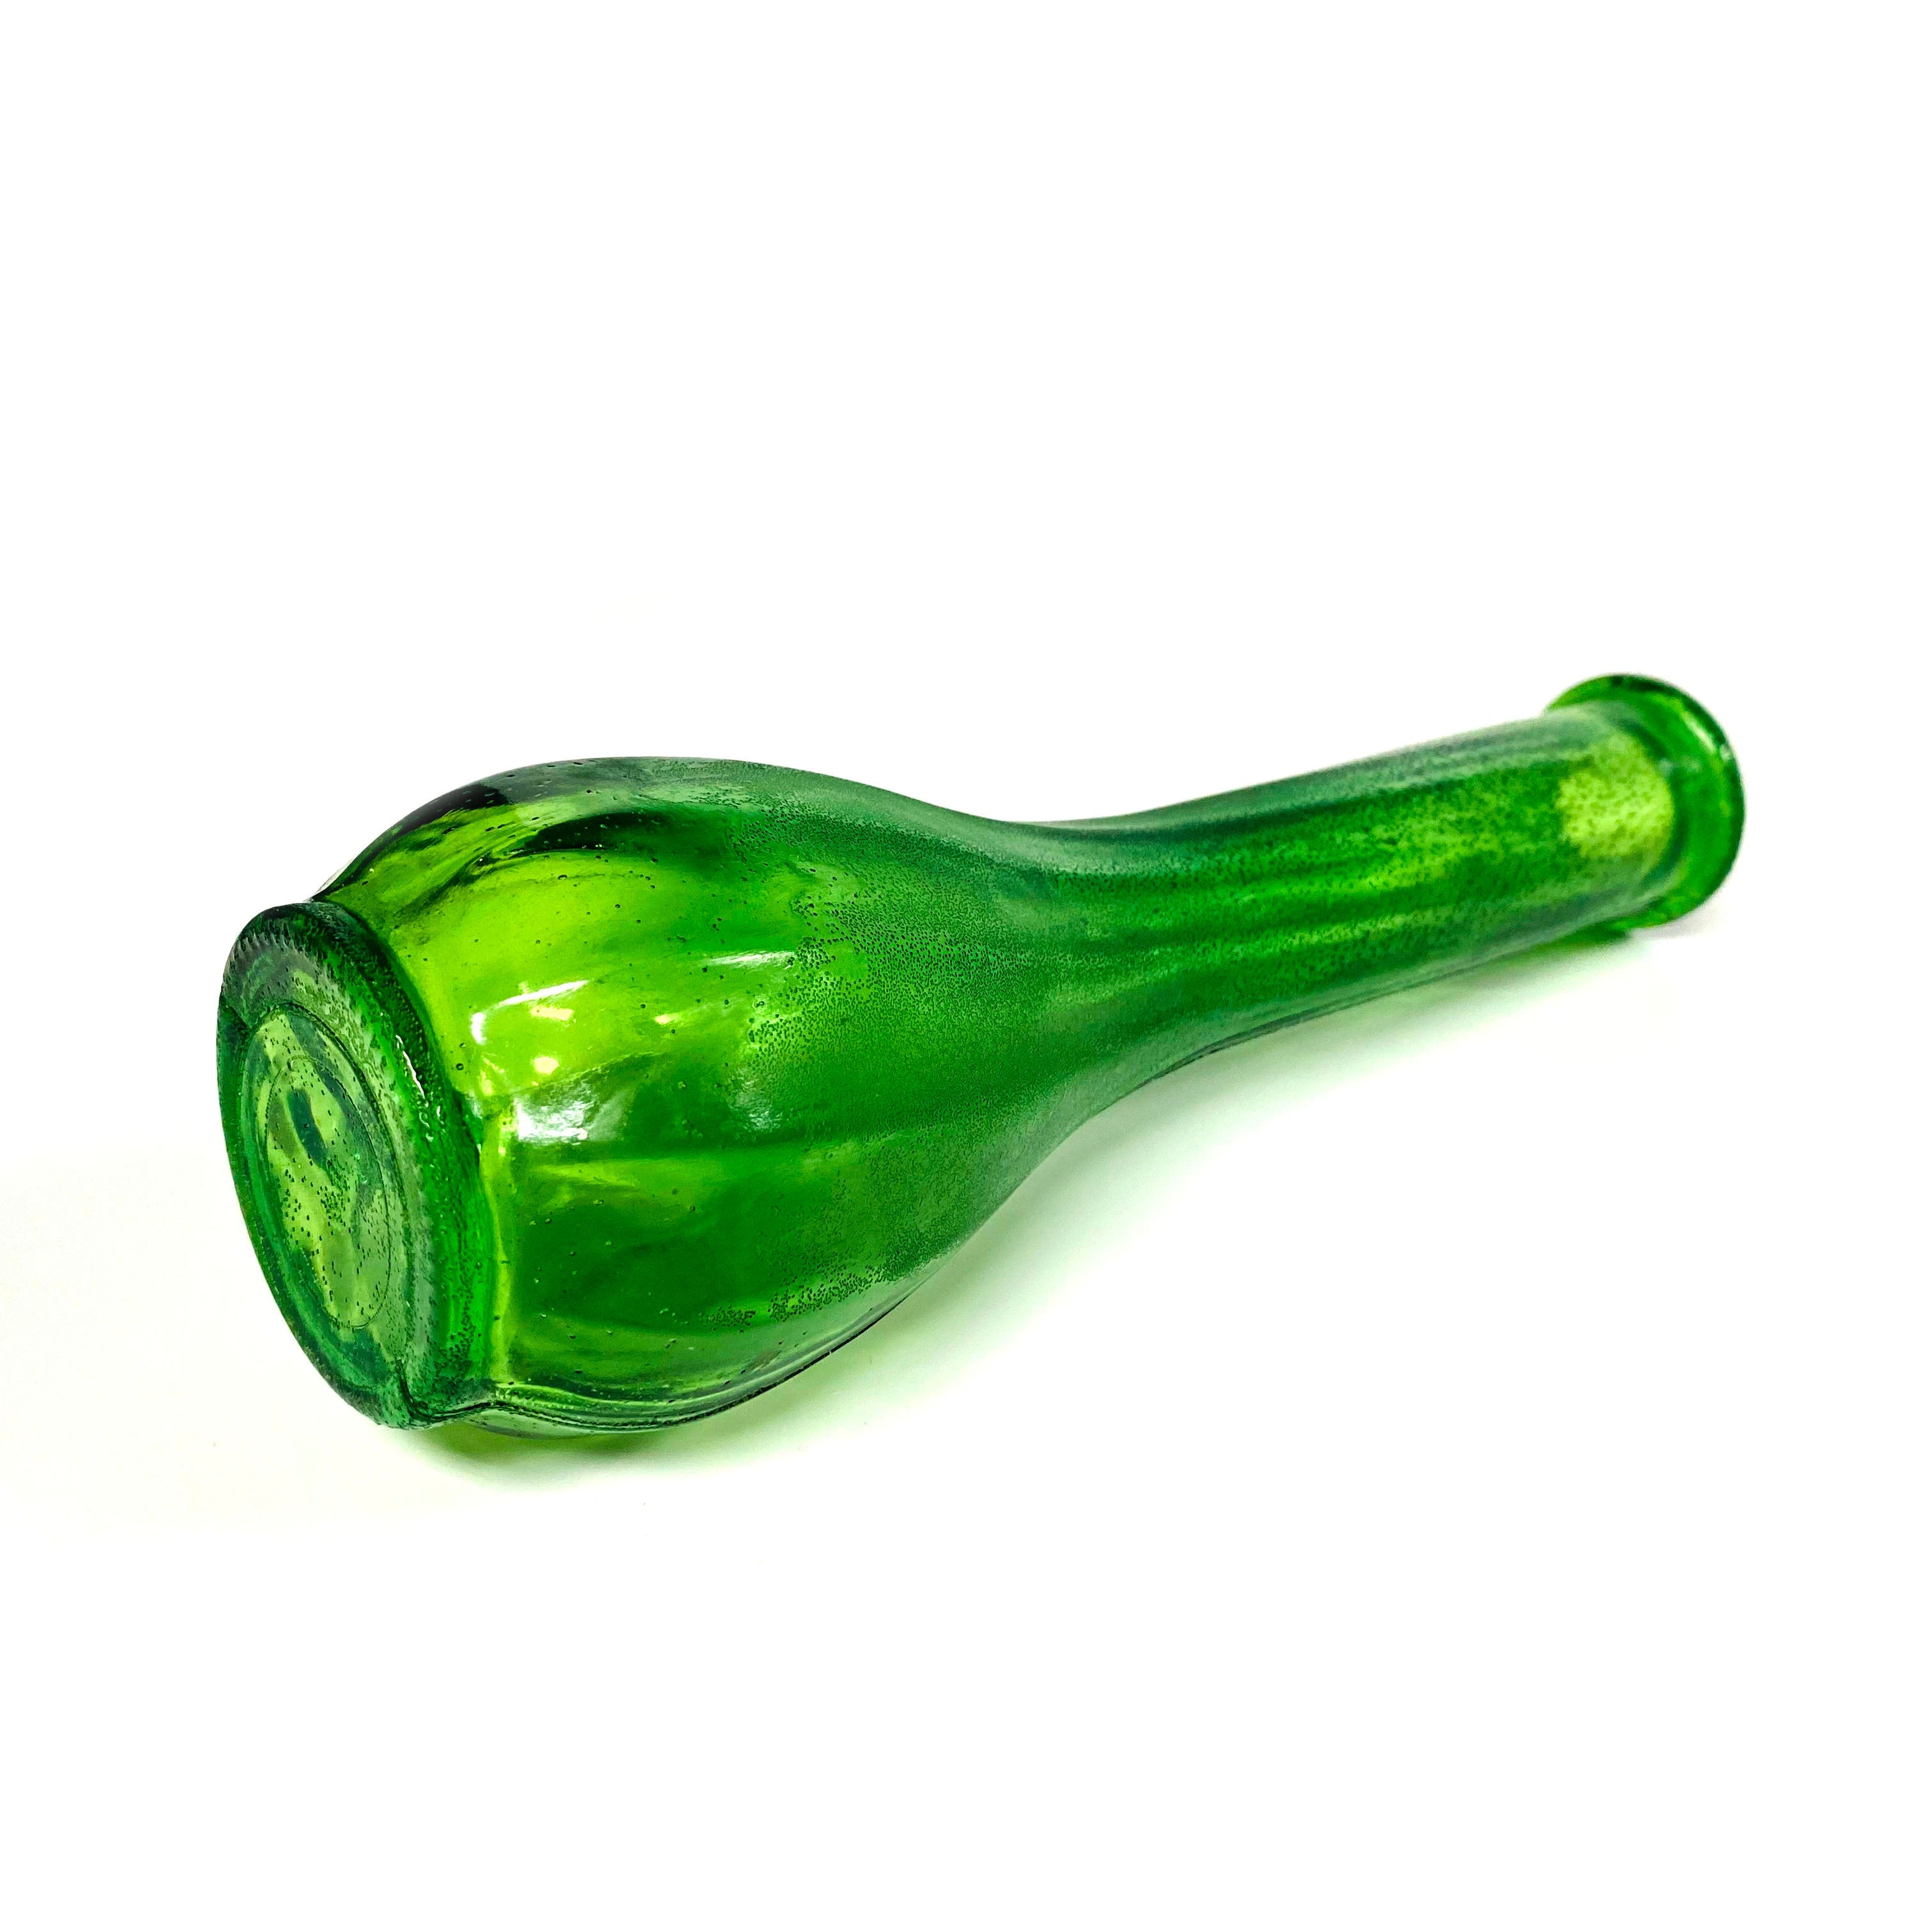 SMASHProps Breakaway Bud Vase - LIGHT GREEN translucent - Light Green,Translucent